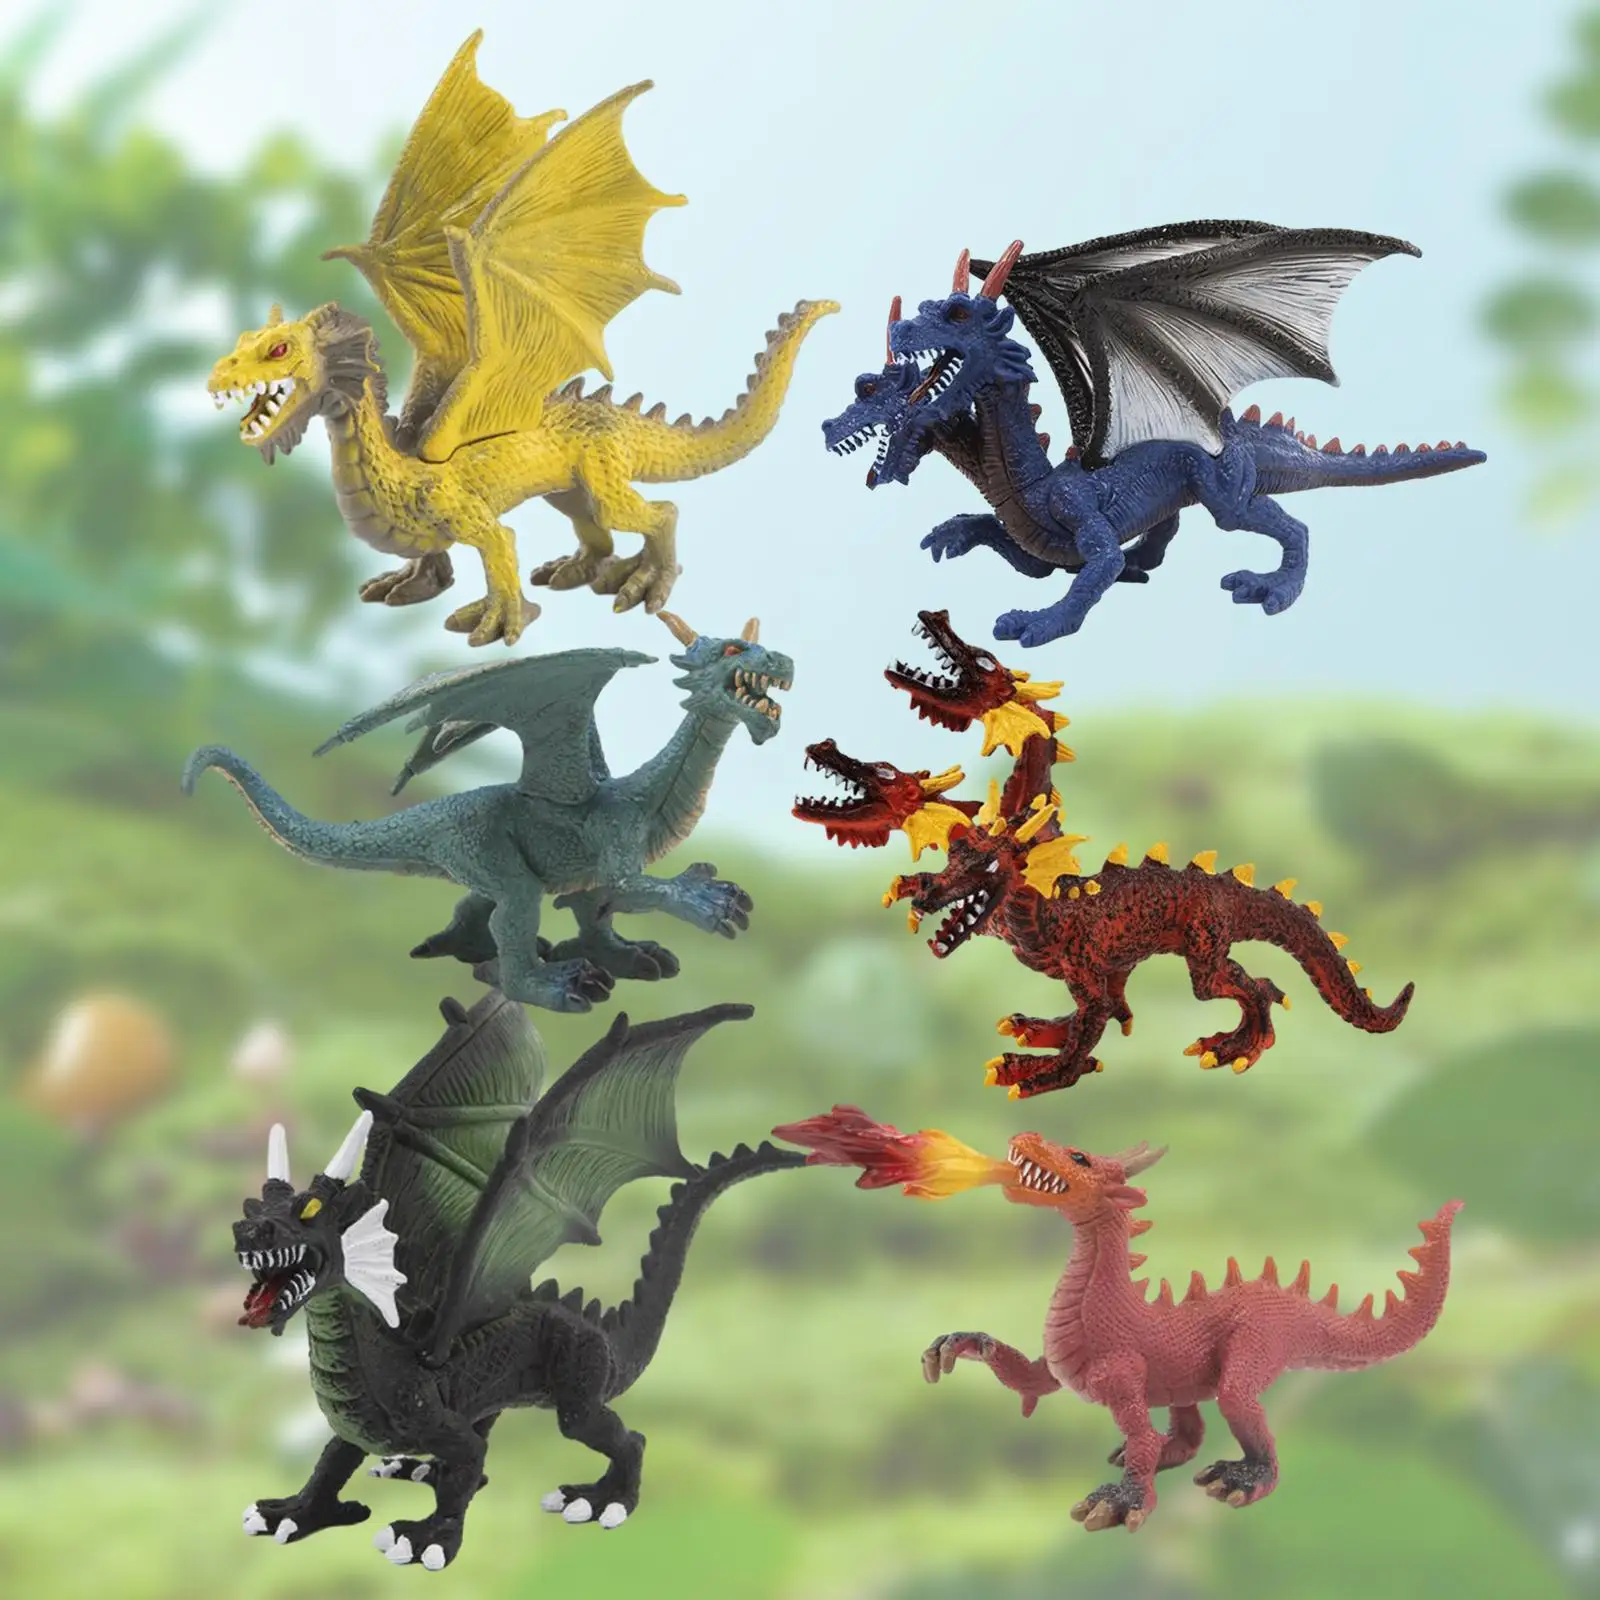 6x Dragon Figurines Dragon Statue Colorful Realistic Figure Model for Rewards Collection Science Props Desktop Decor Party Favor